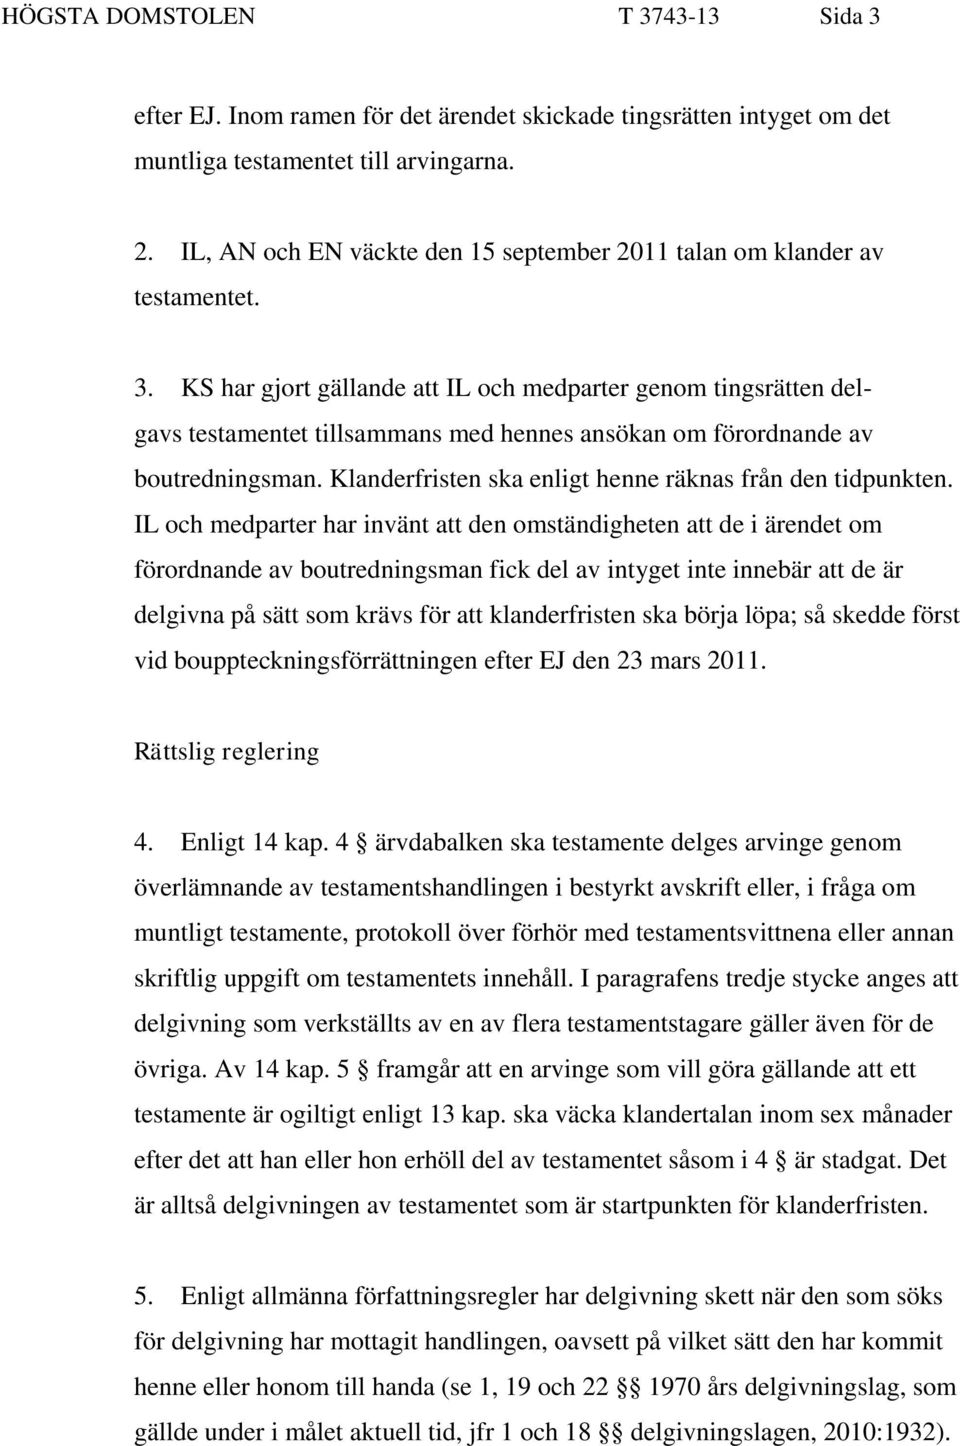 HÖGSTA DOMSTOLENS DOM - PDF Free Download